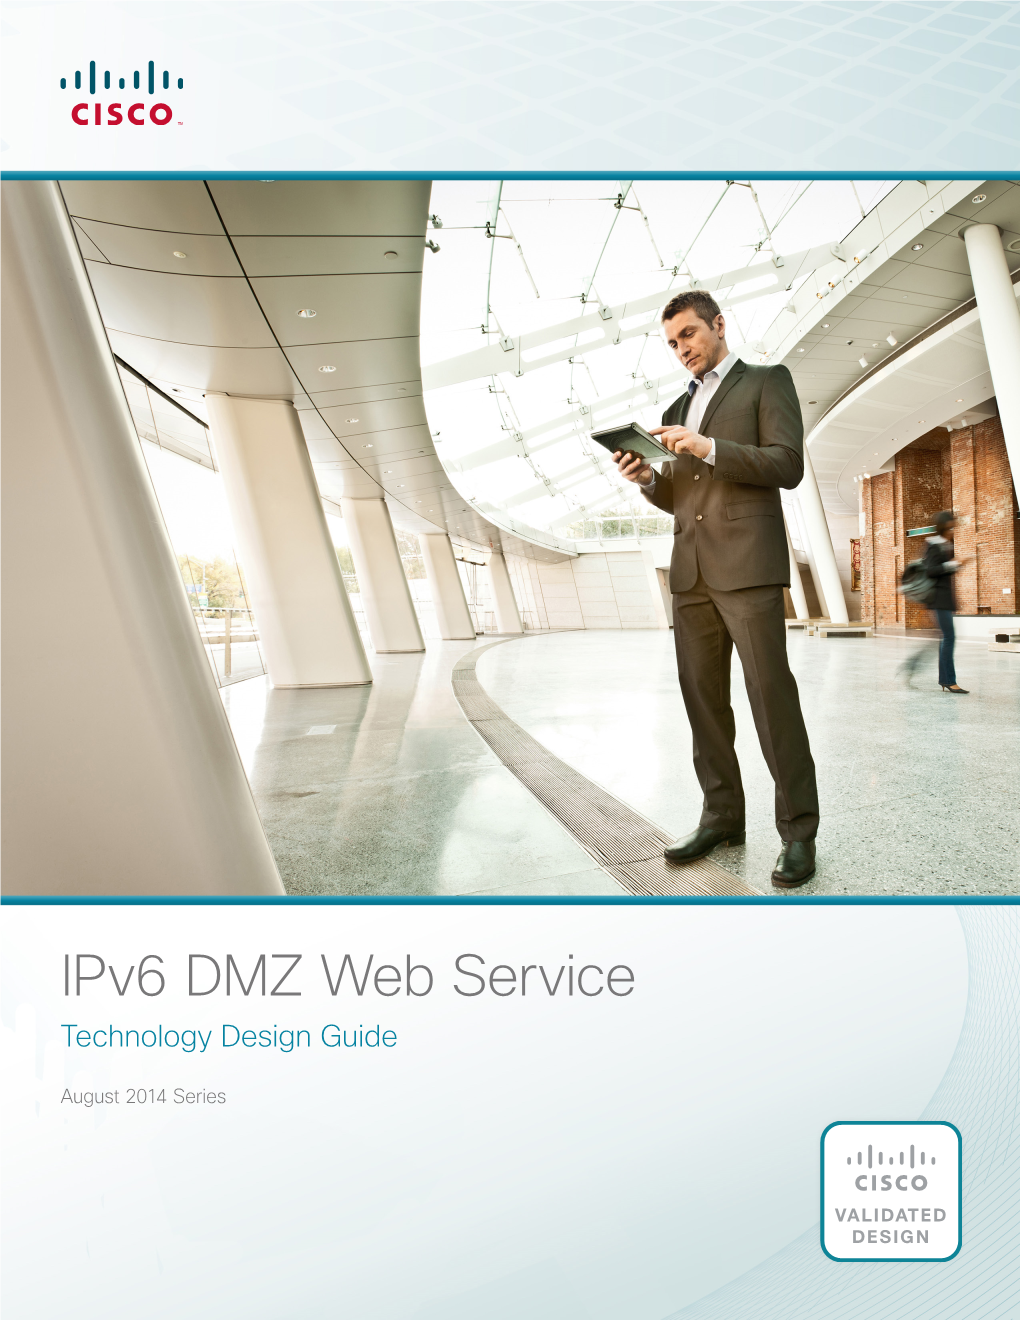 Ipv6 DMZ Web Service Technology Design Guide